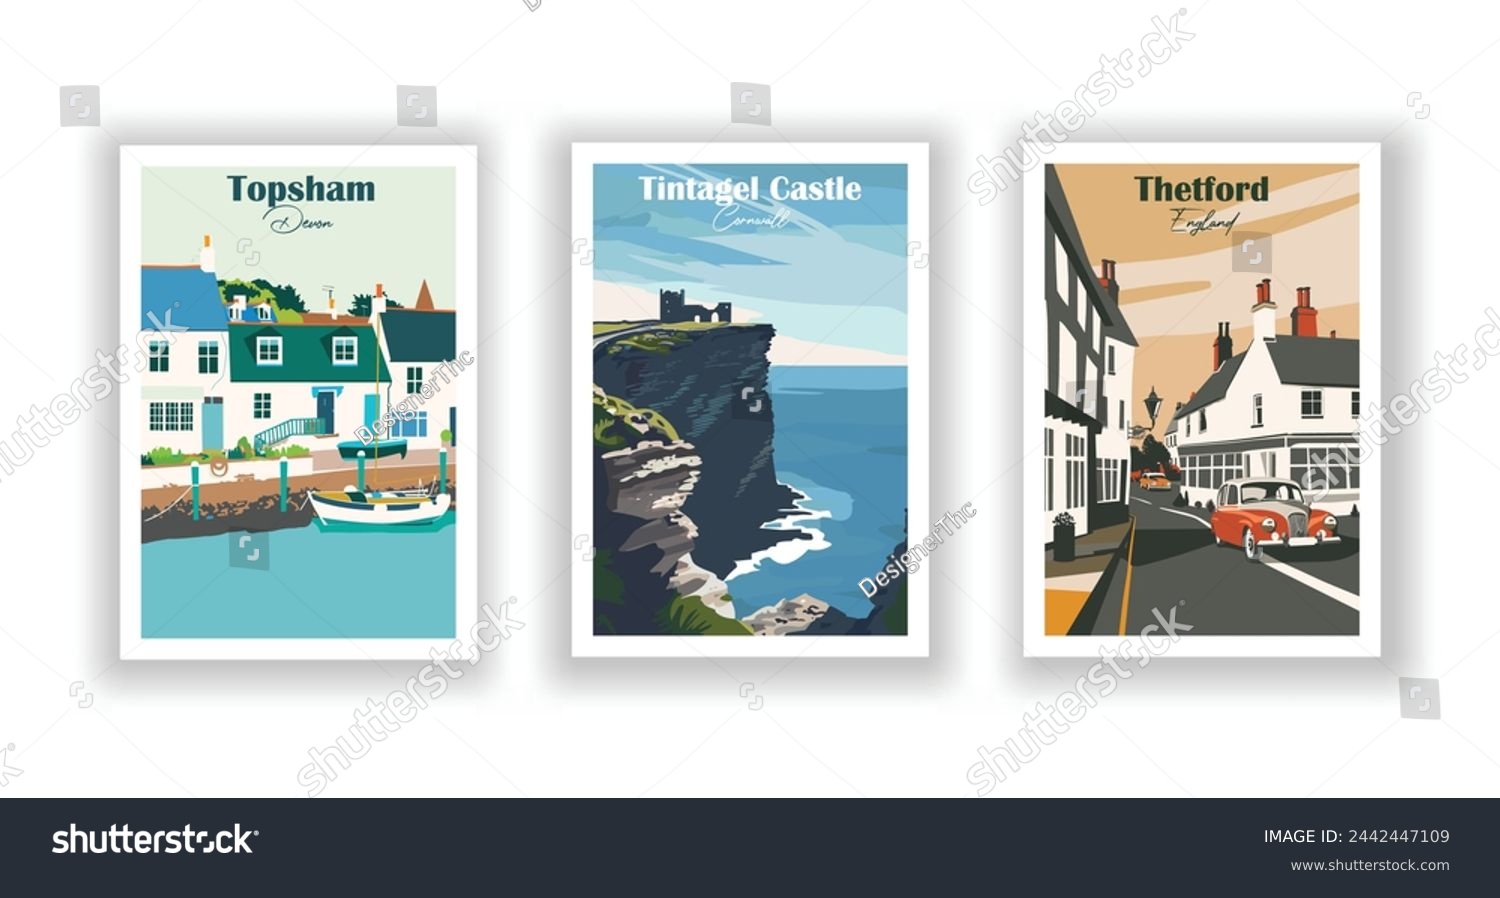 SVG of Thetford, England. Tintagel Castle, Cornwall. Topsham, Devon - Set of 3 Vintage Travel Posters. Vector illustration. High Quality Prints svg